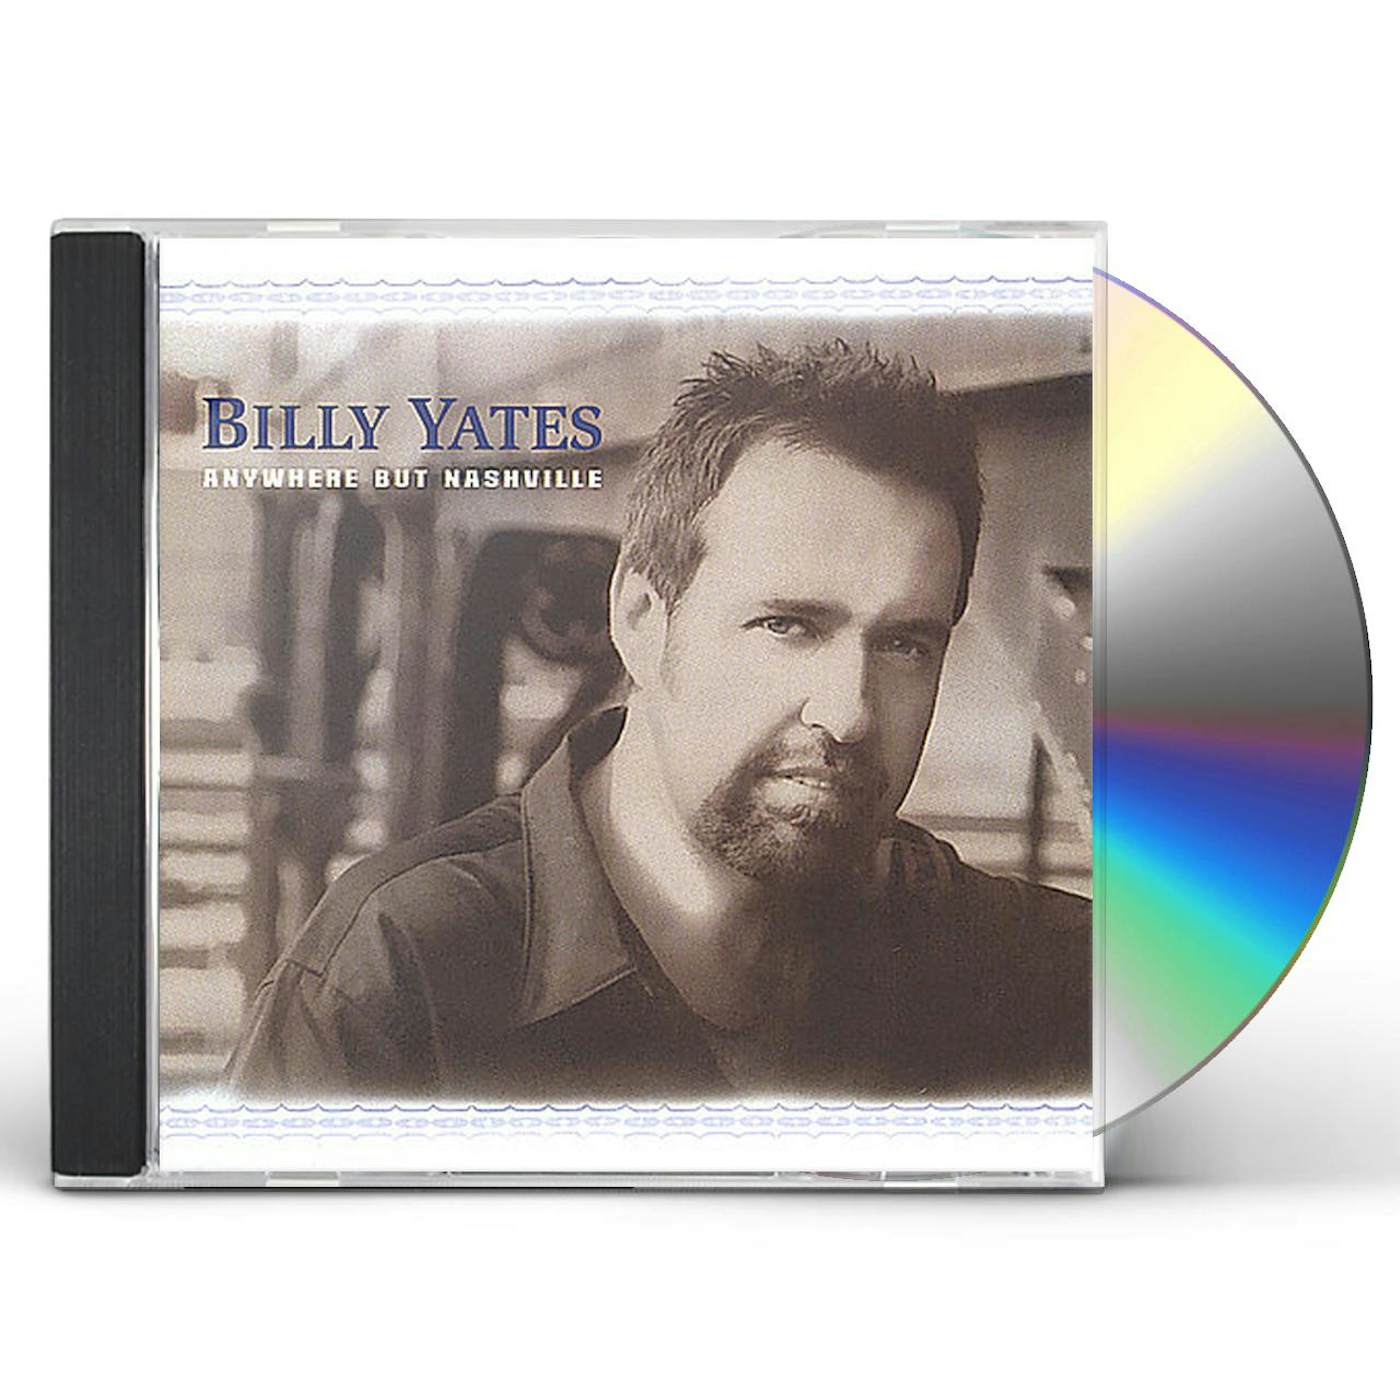 Billy Yates ANYWHERE BUT NASHVILLE CD